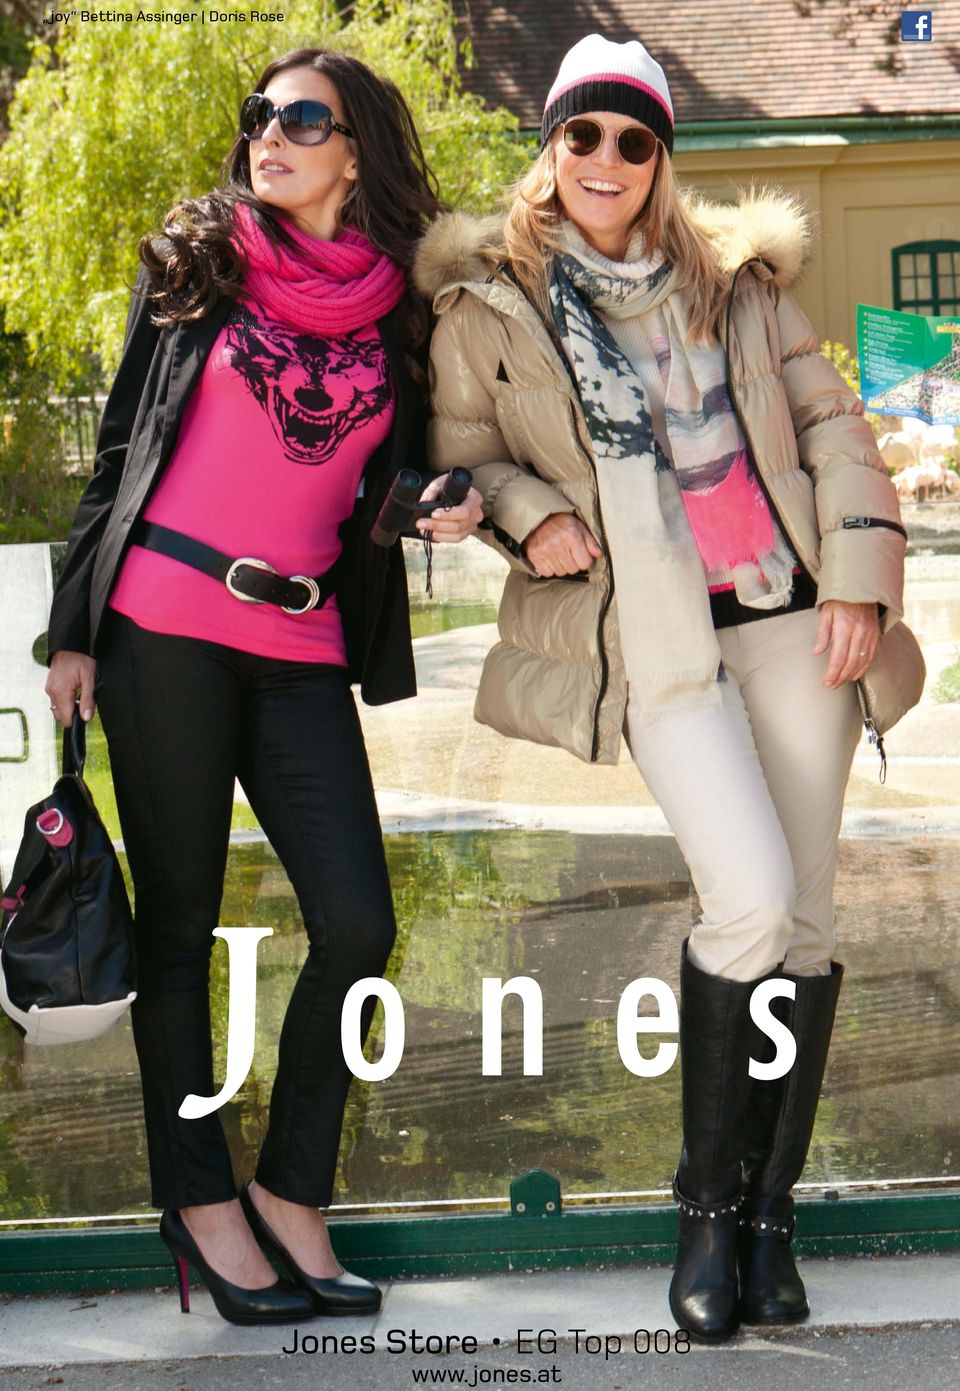 Rose Jones Store